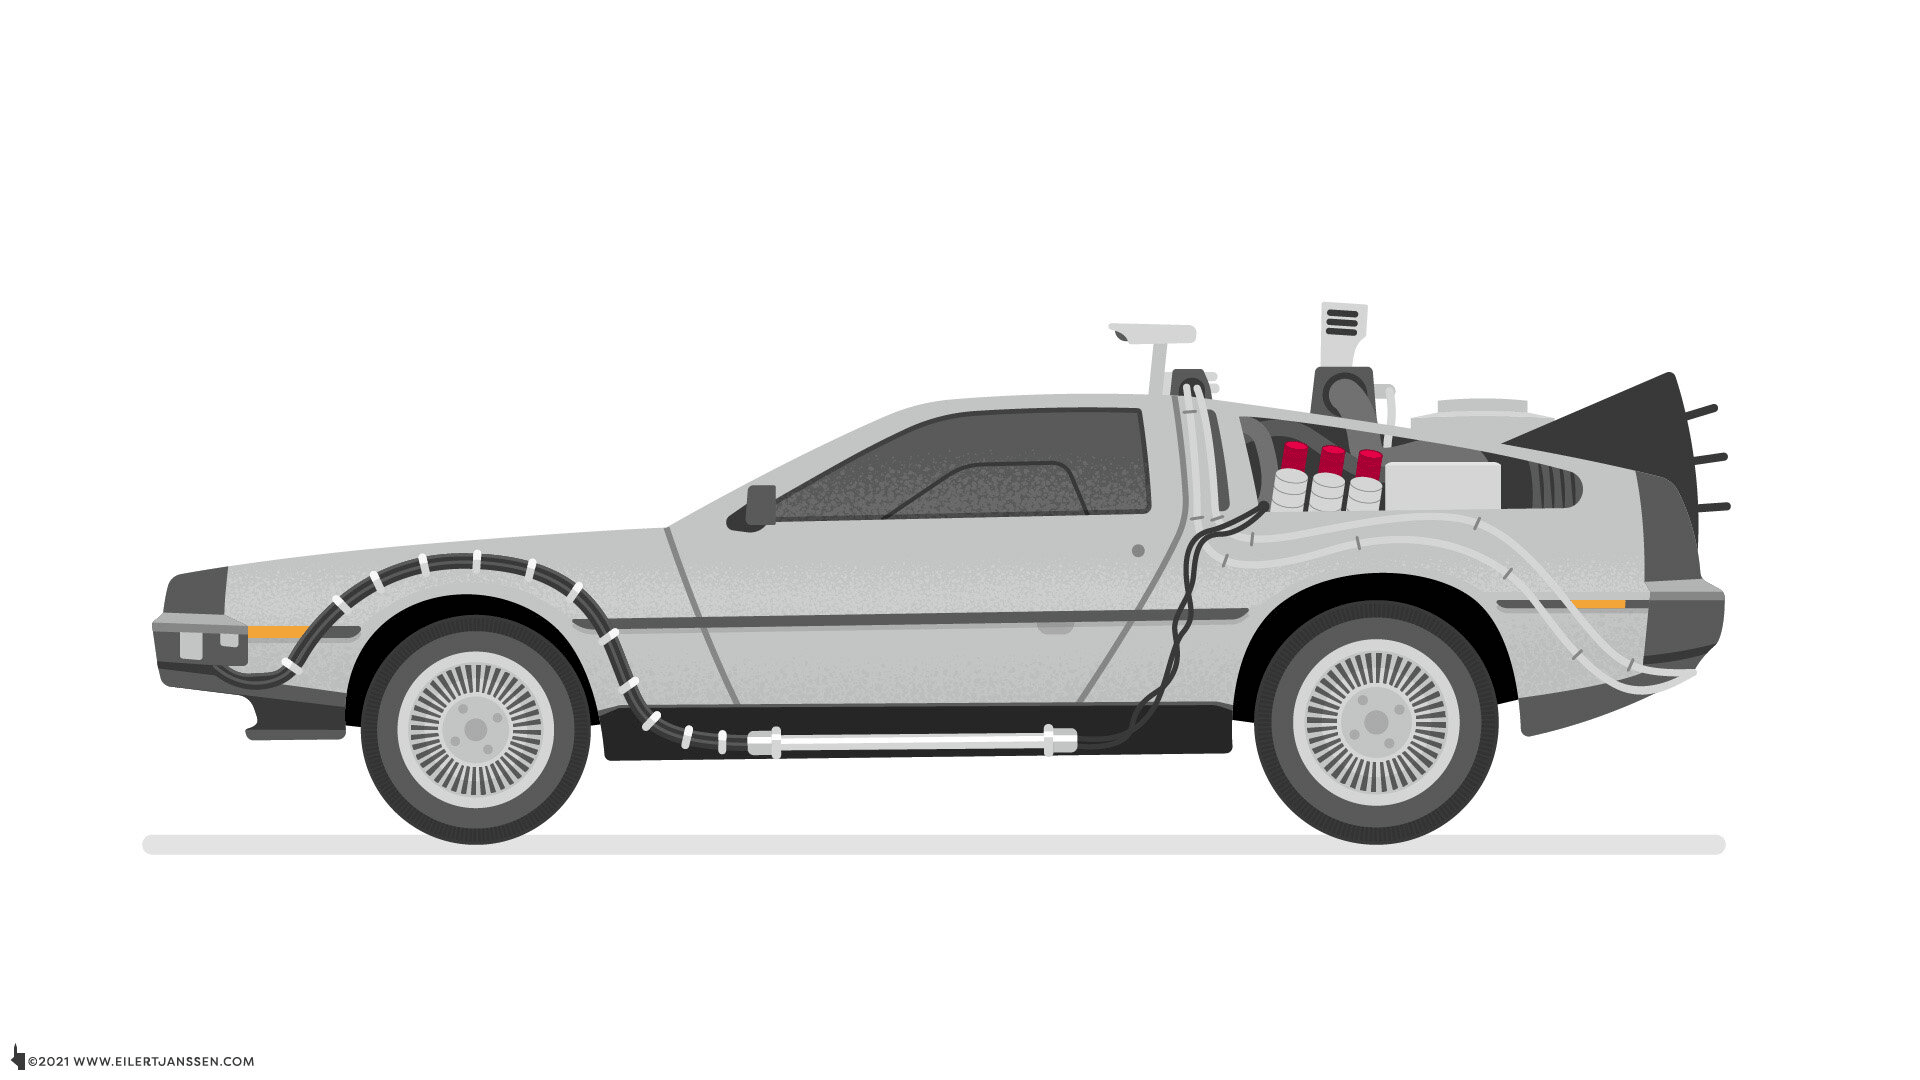 DeLorean time machine - Flat Illustration